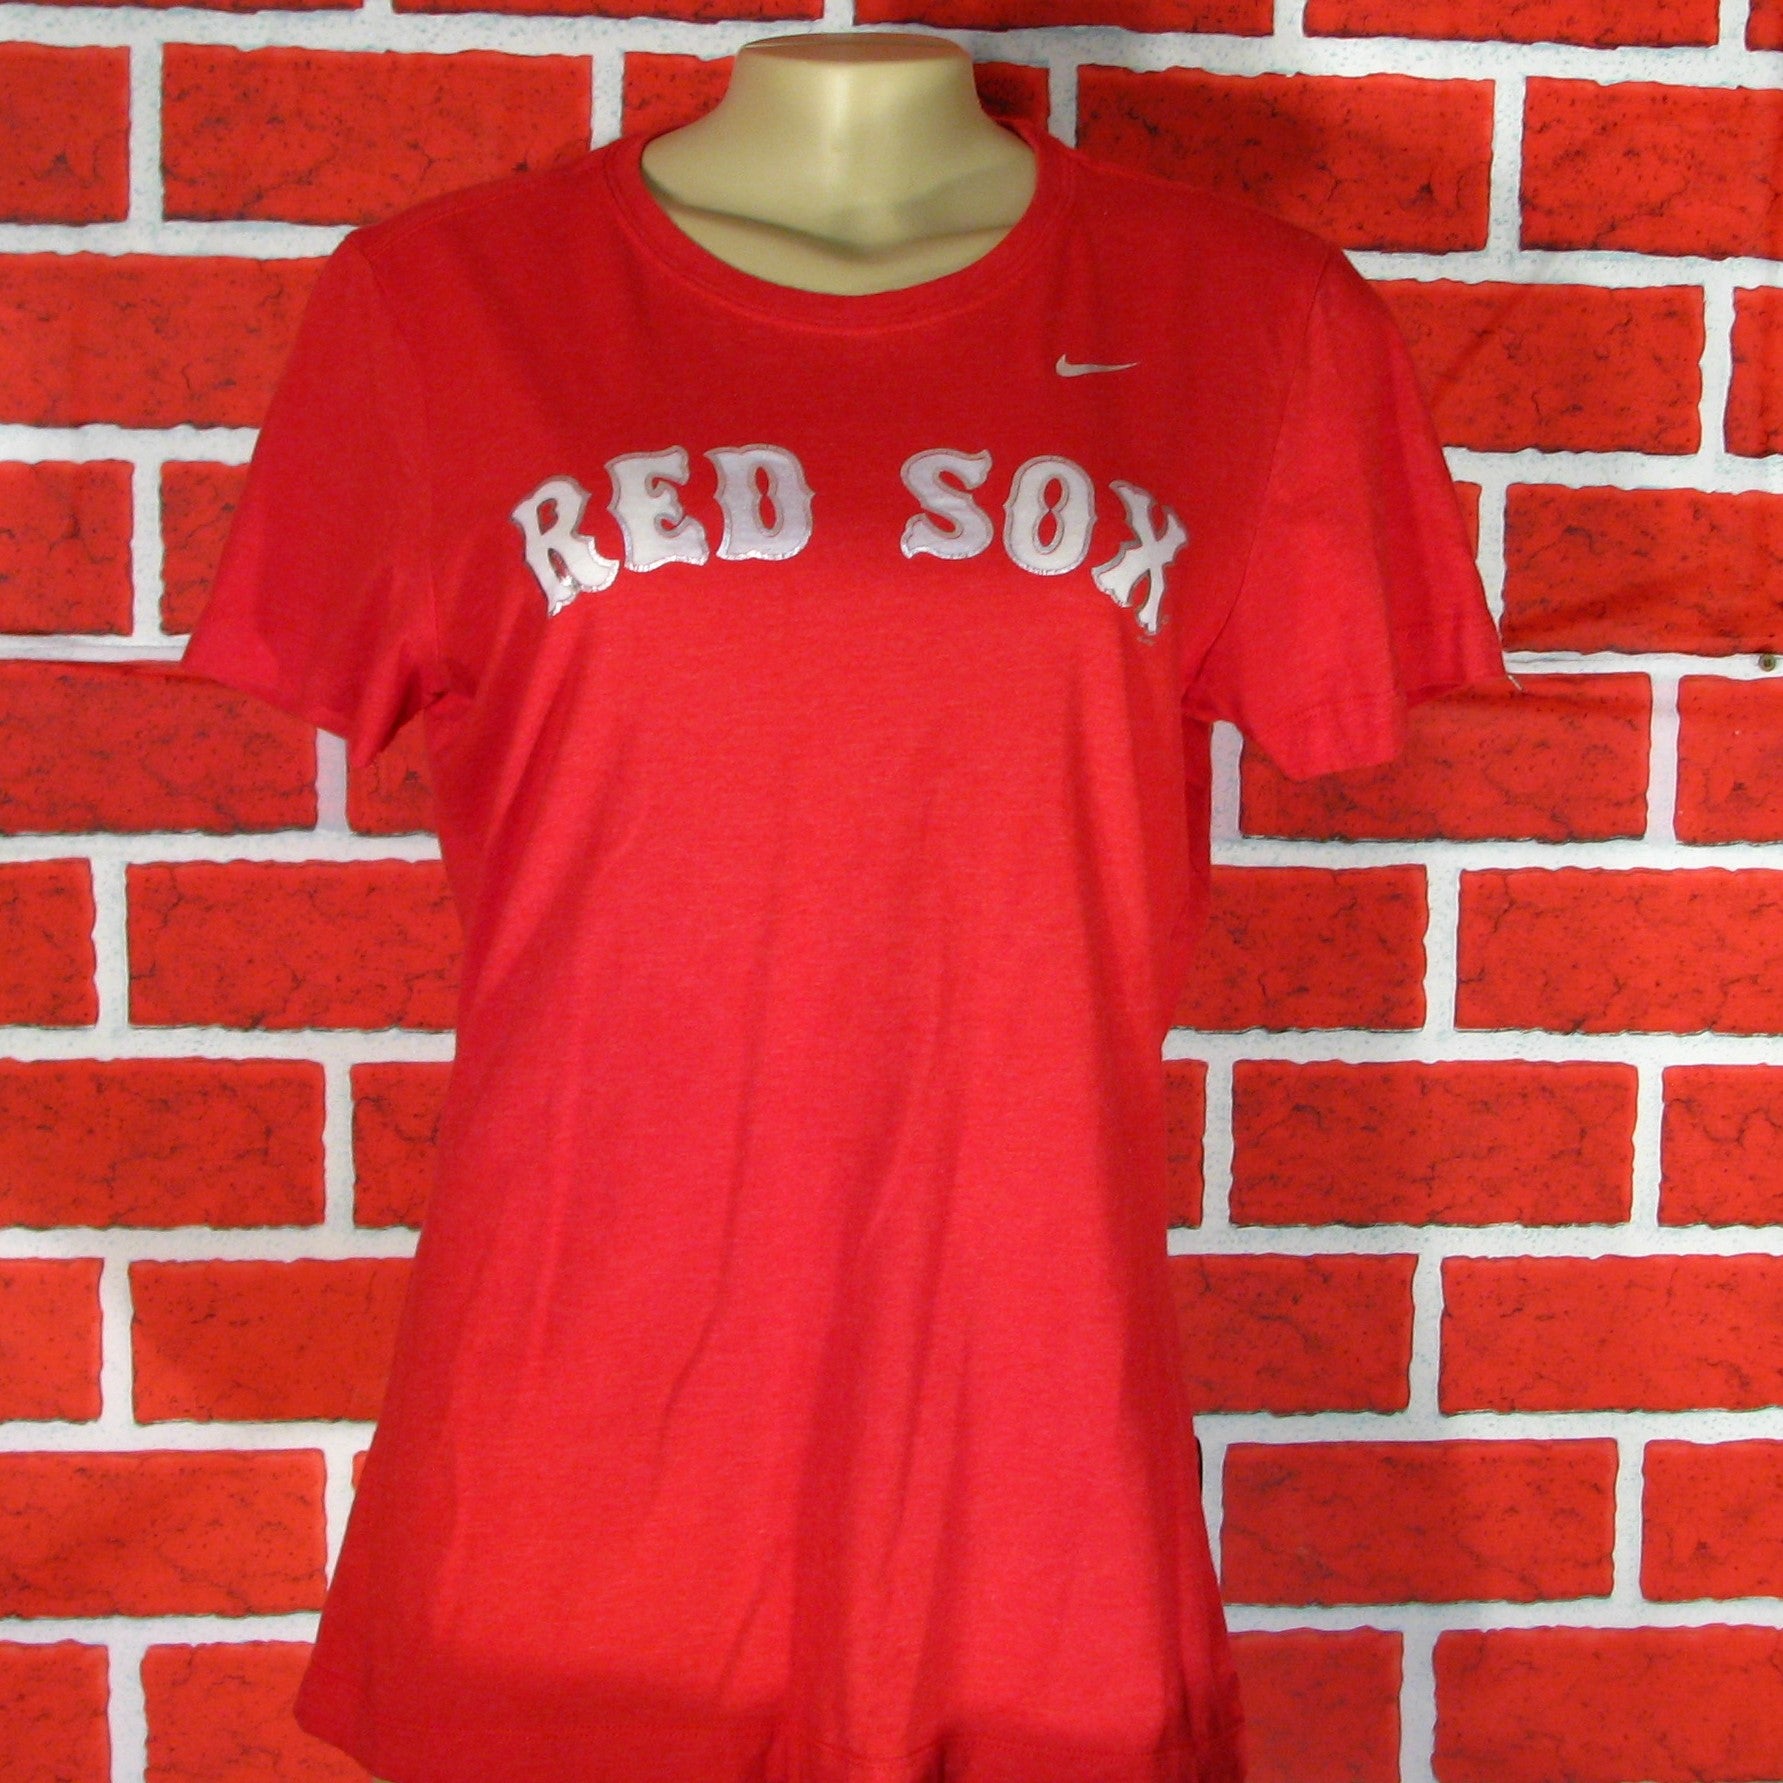 womens red sox tee shirts